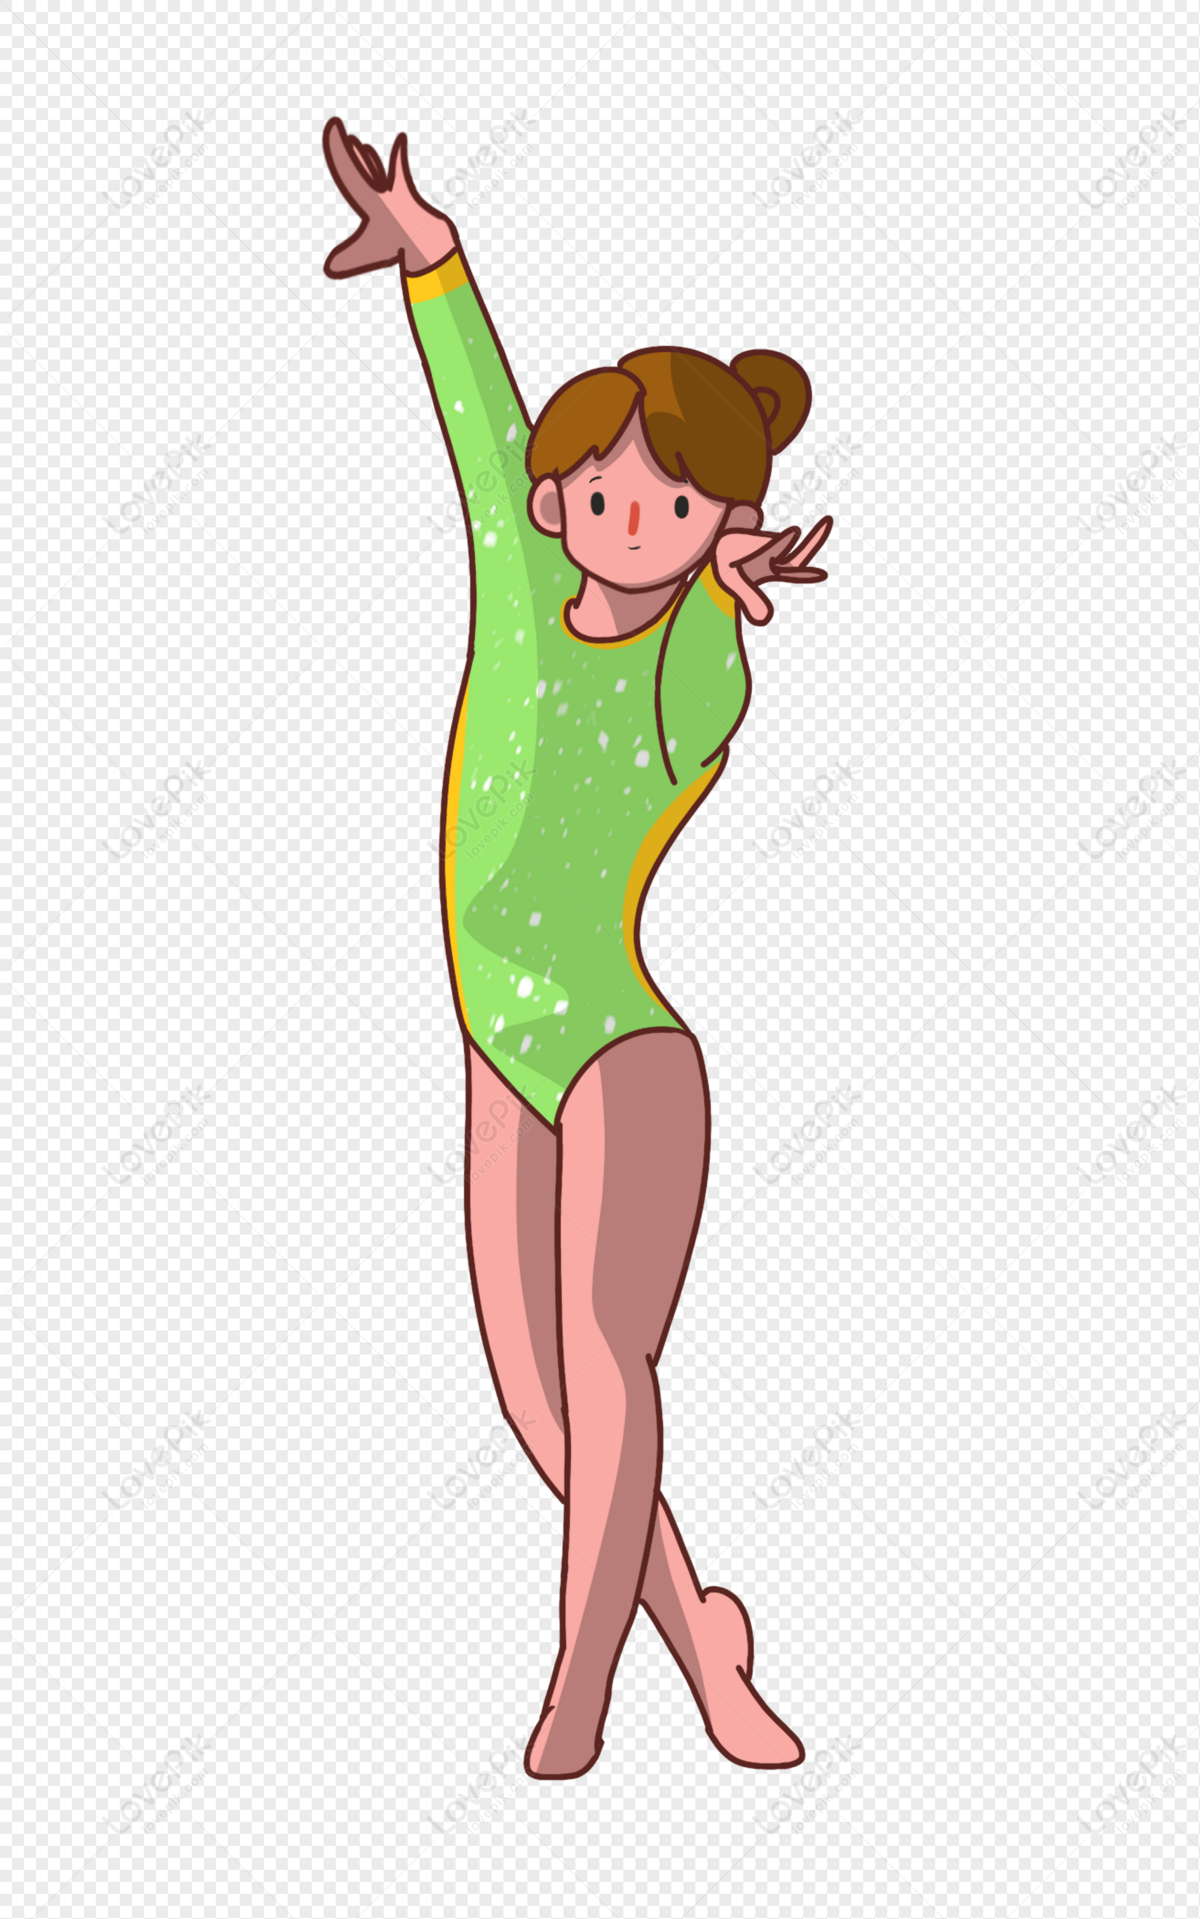 Woman gymnastic vector illustration free hi-res stock photography